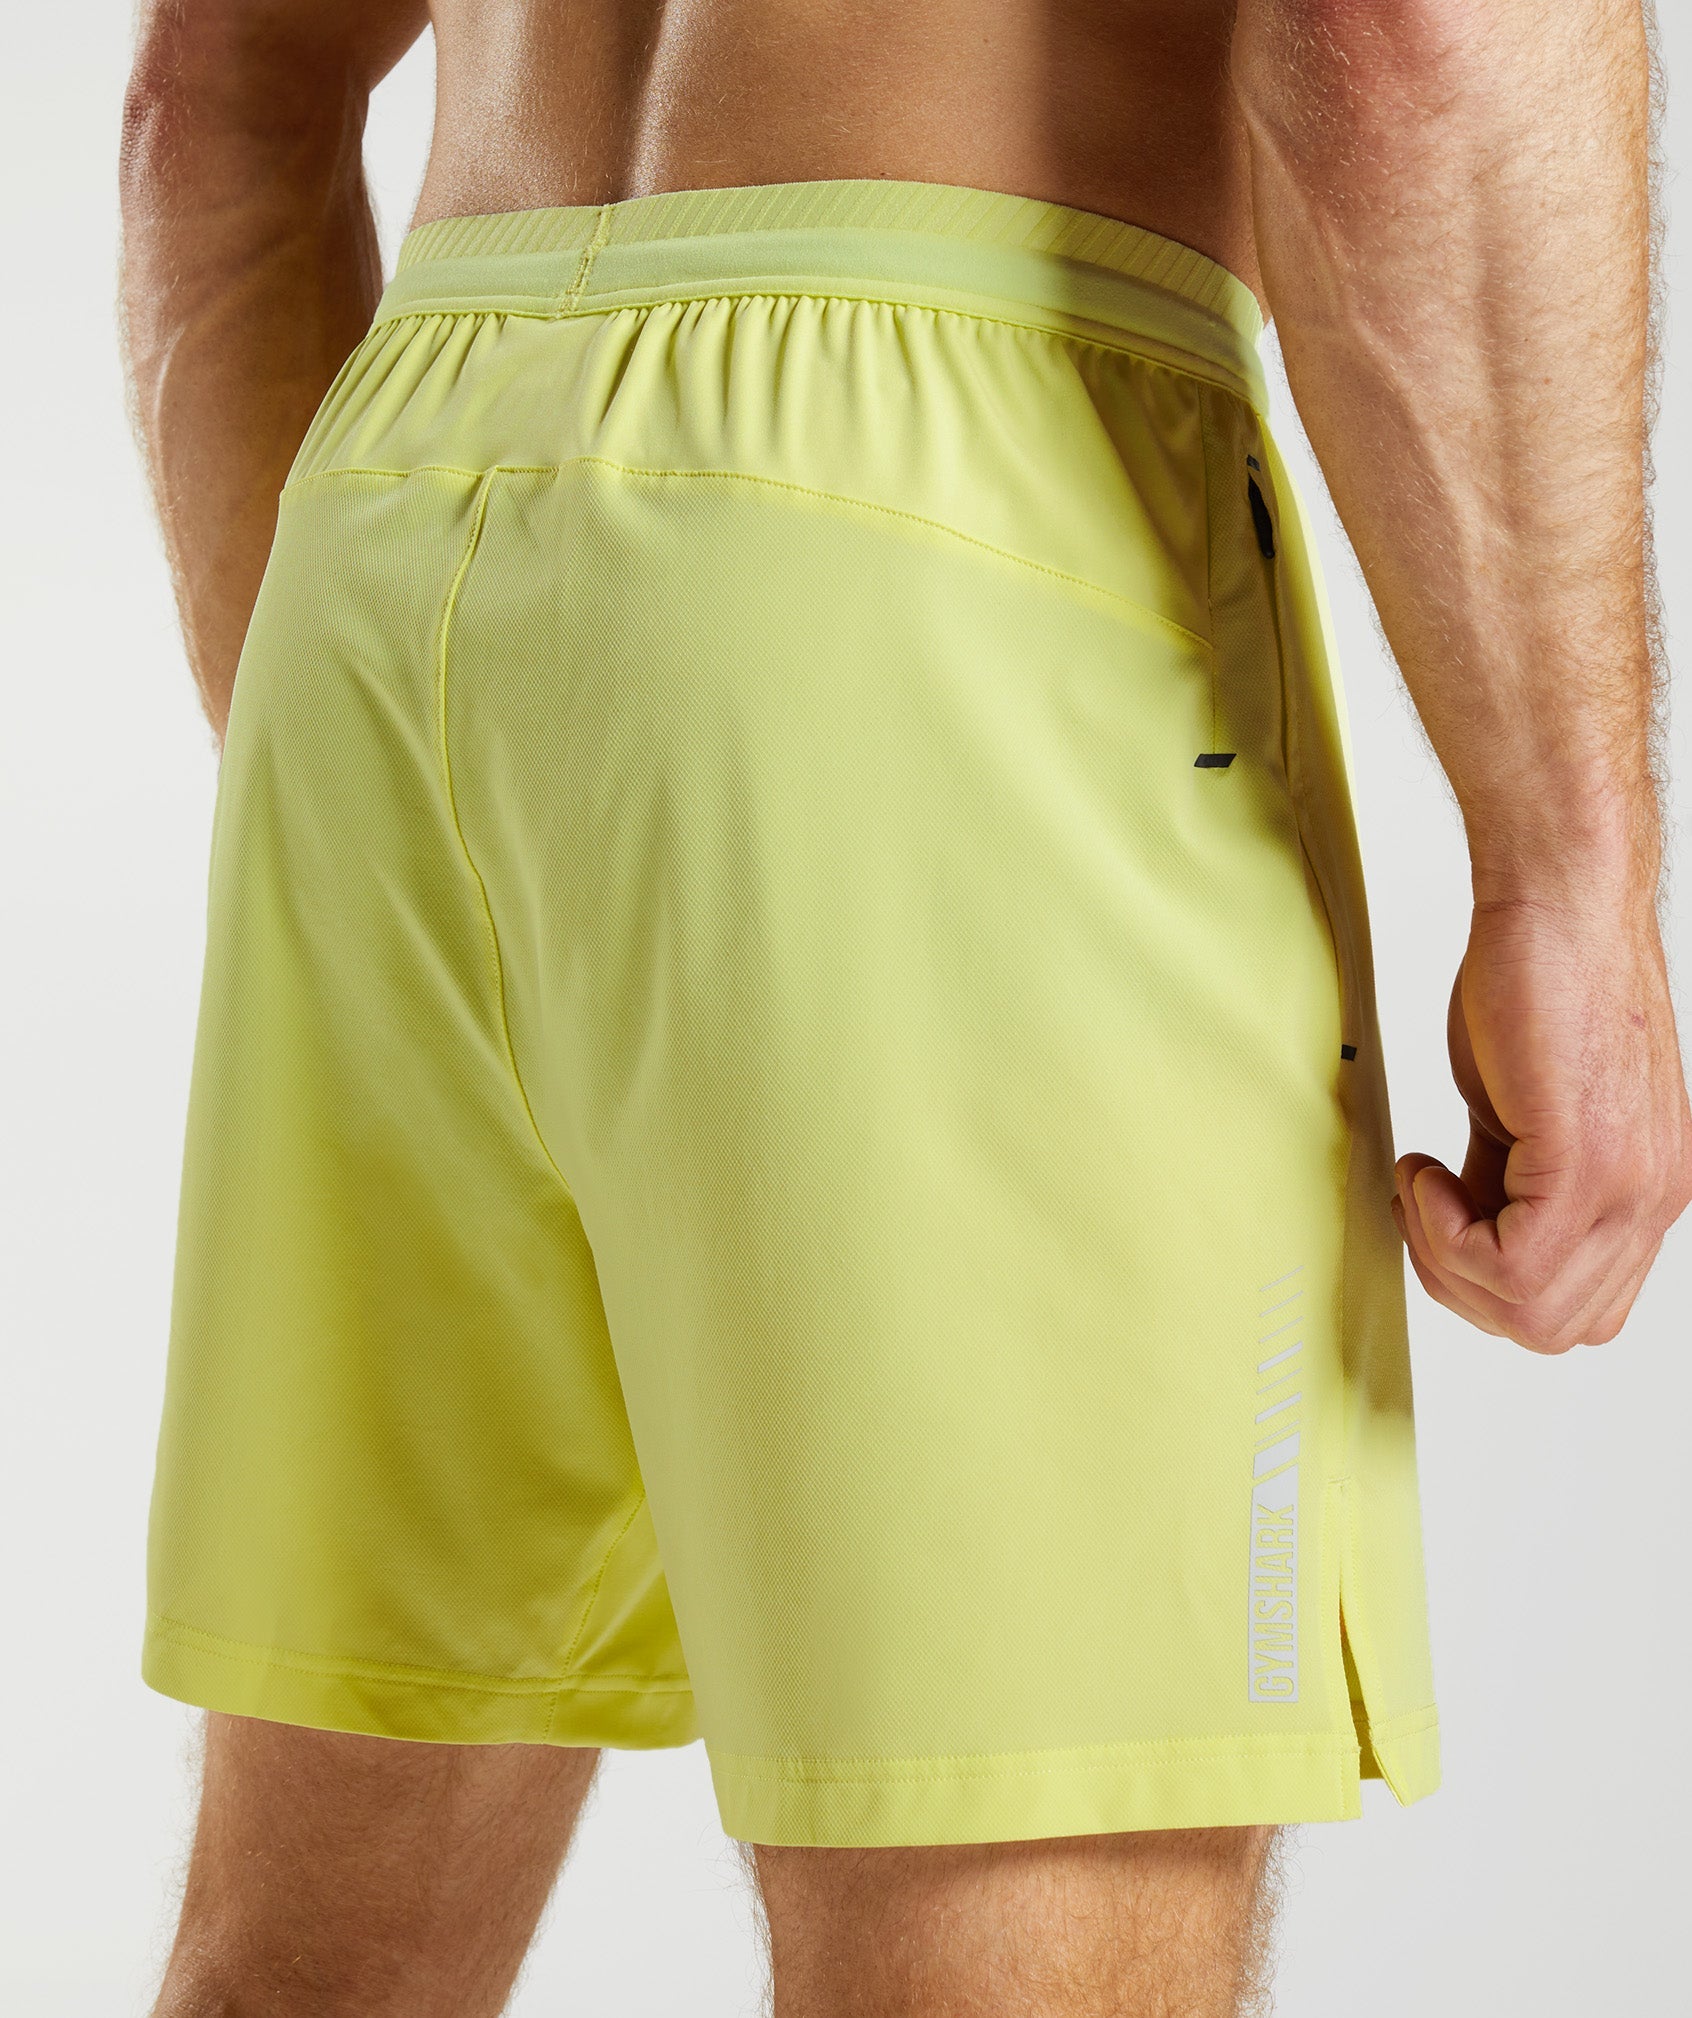 Apex 7" Hybrid Shorts in Firefly Green